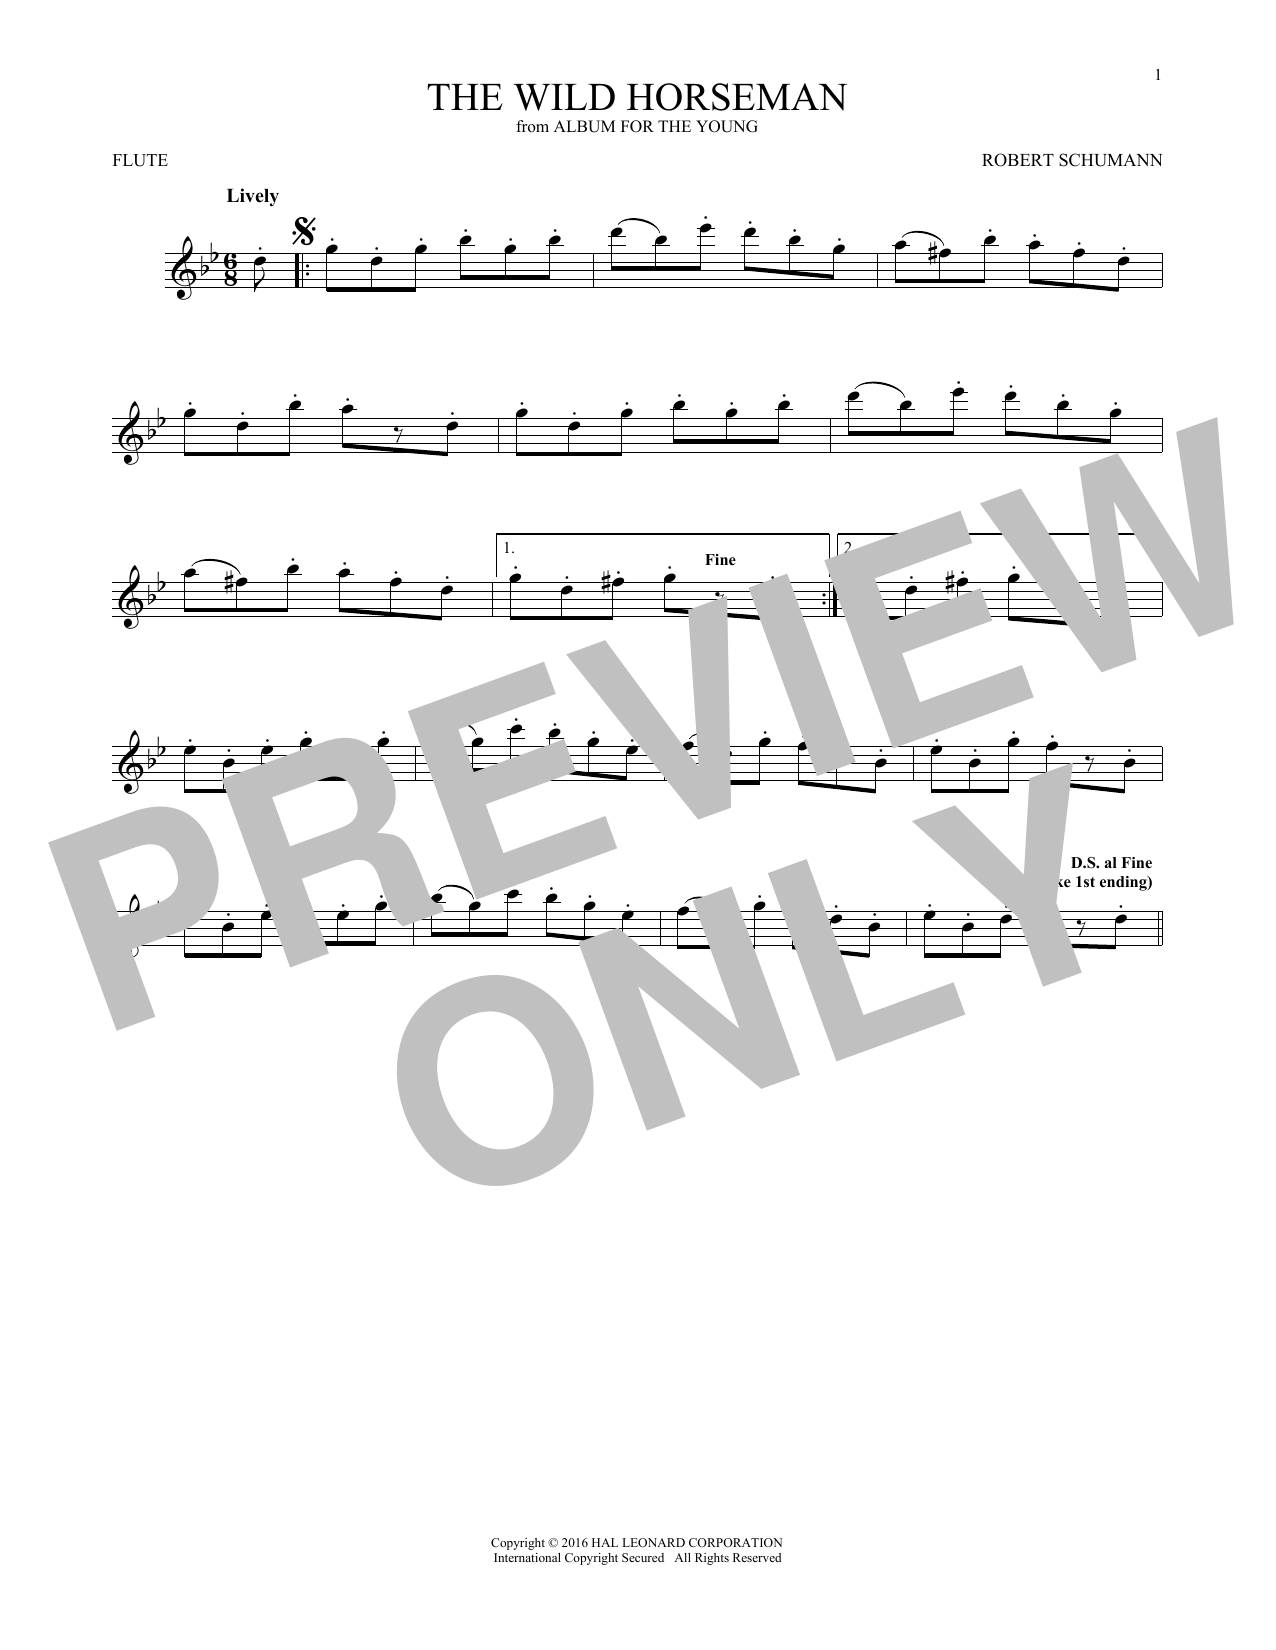 Download Robert Schumann The Wild Horseman (Wilder Reiter), Op. 68, No. 8 Sheet Music and learn how to play Trombone PDF digital score in minutes